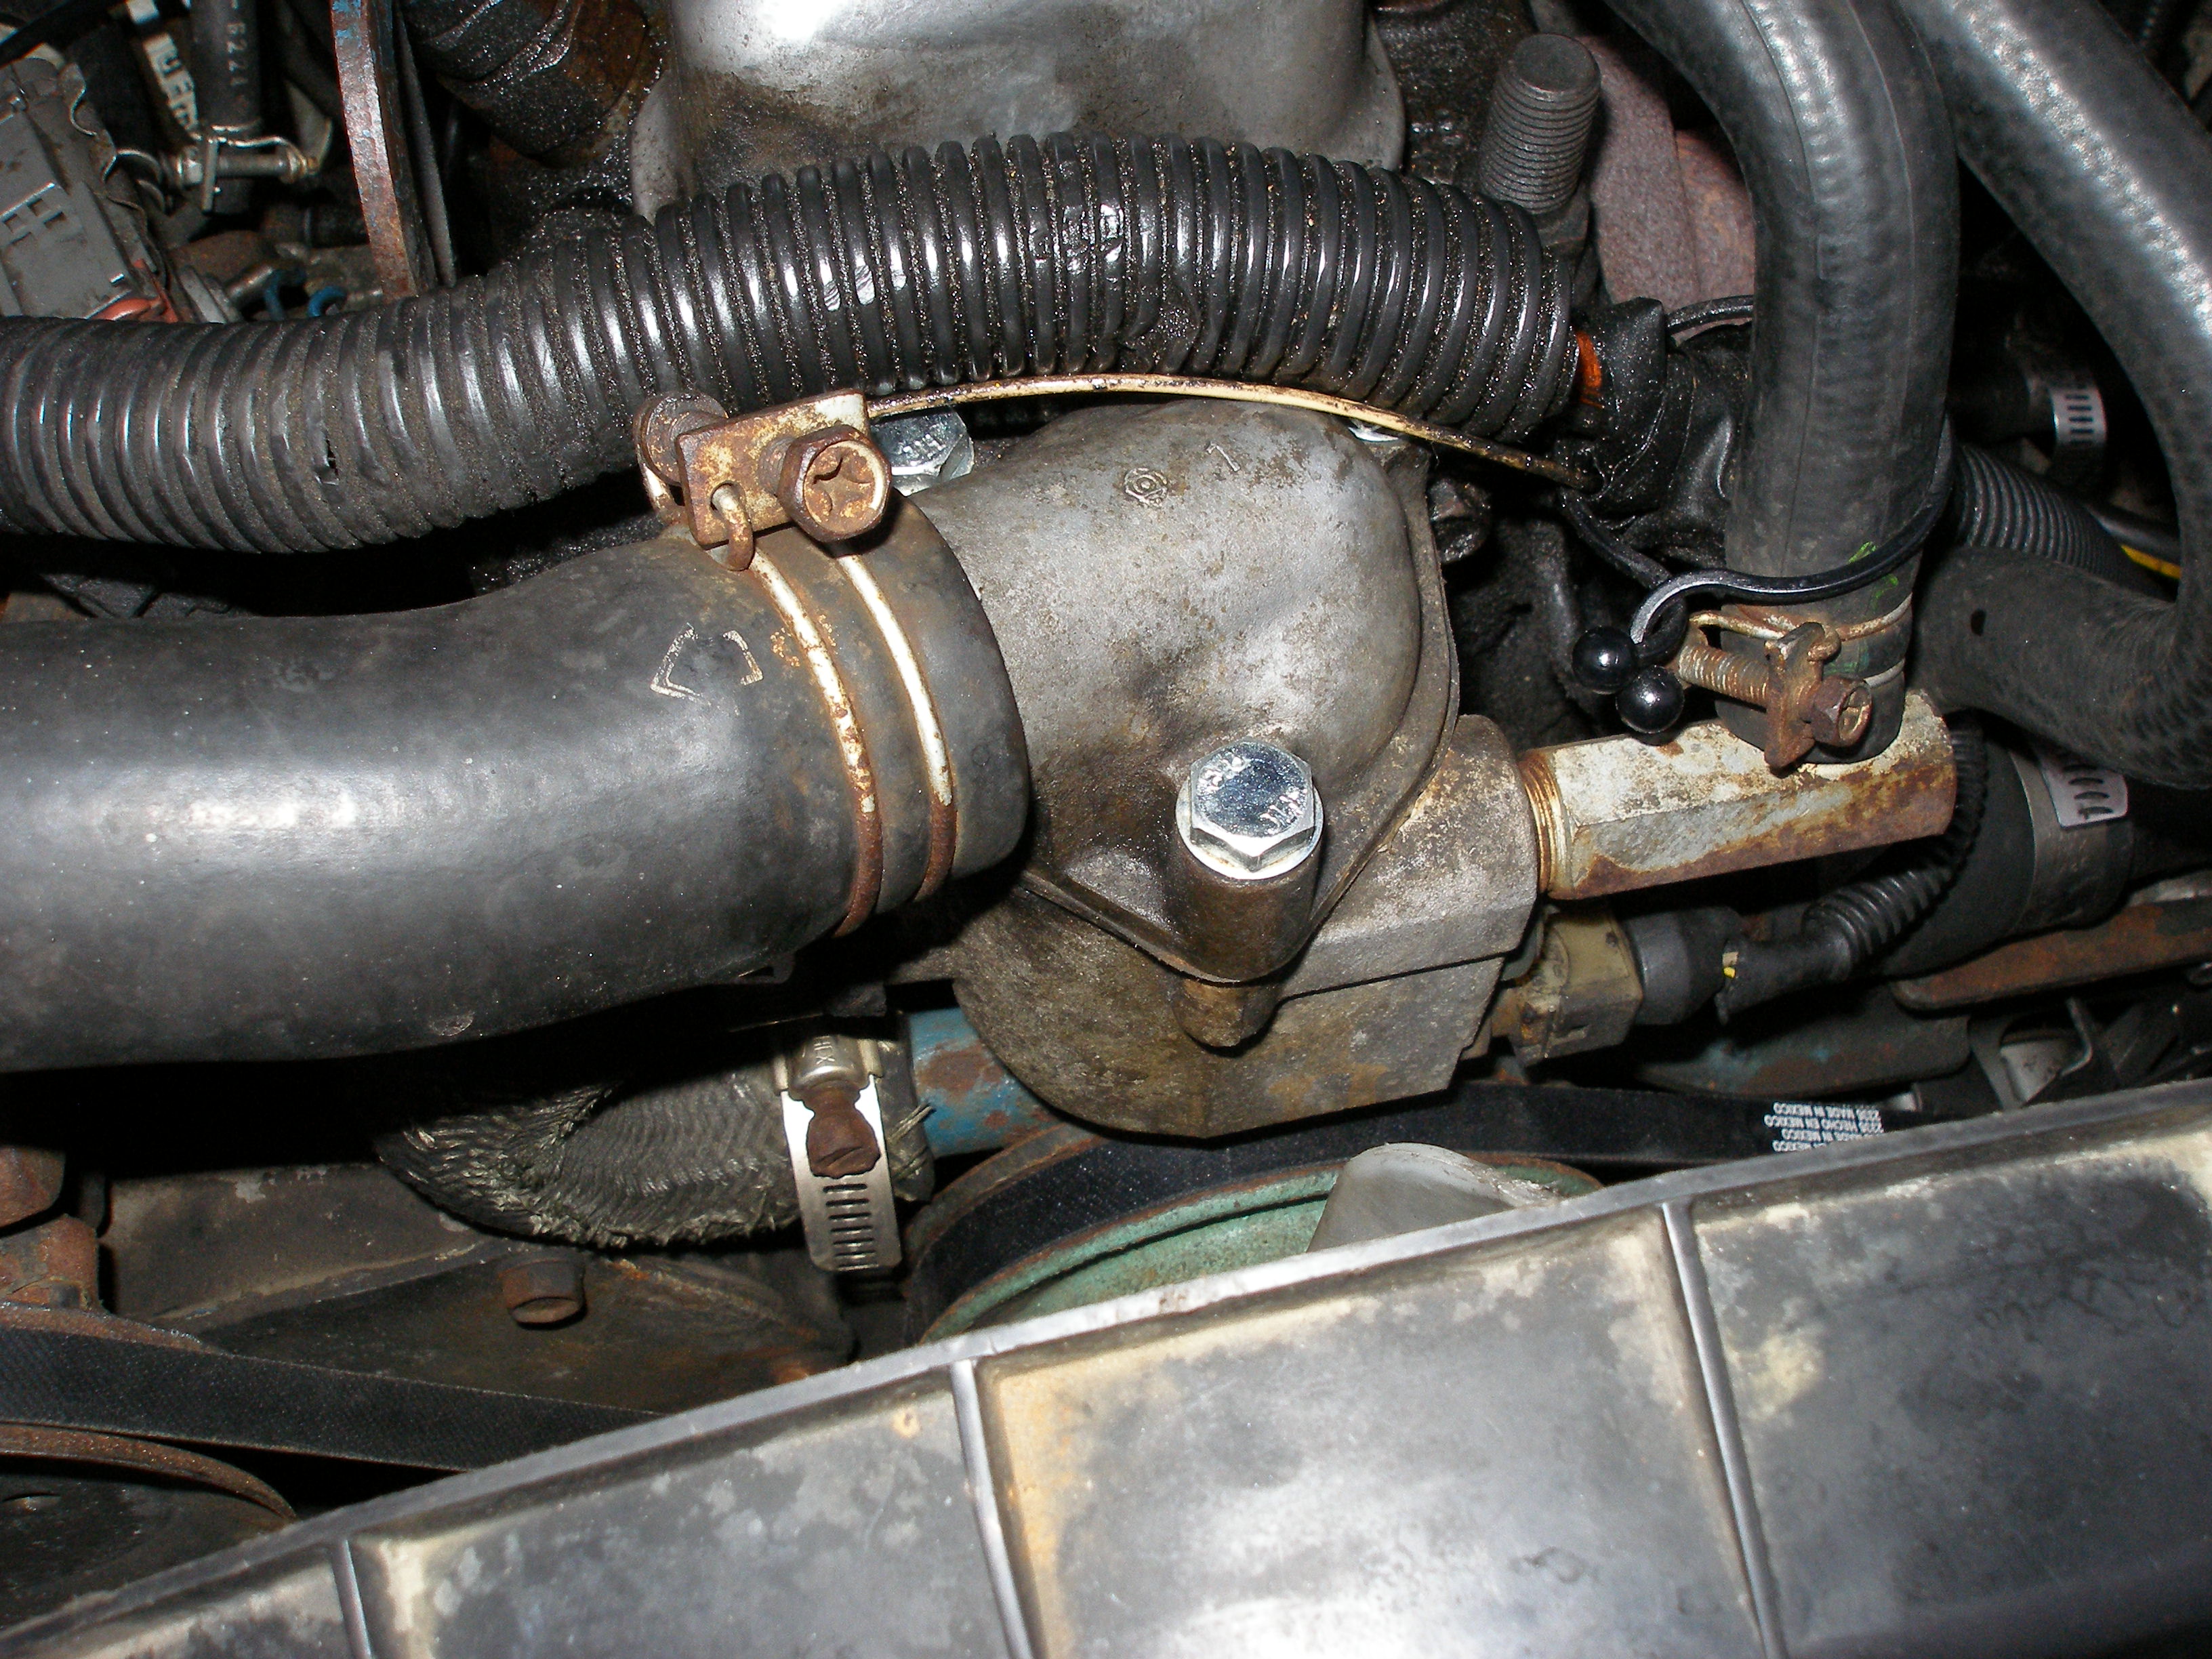 1996 Nissan maxima coolant leak #4